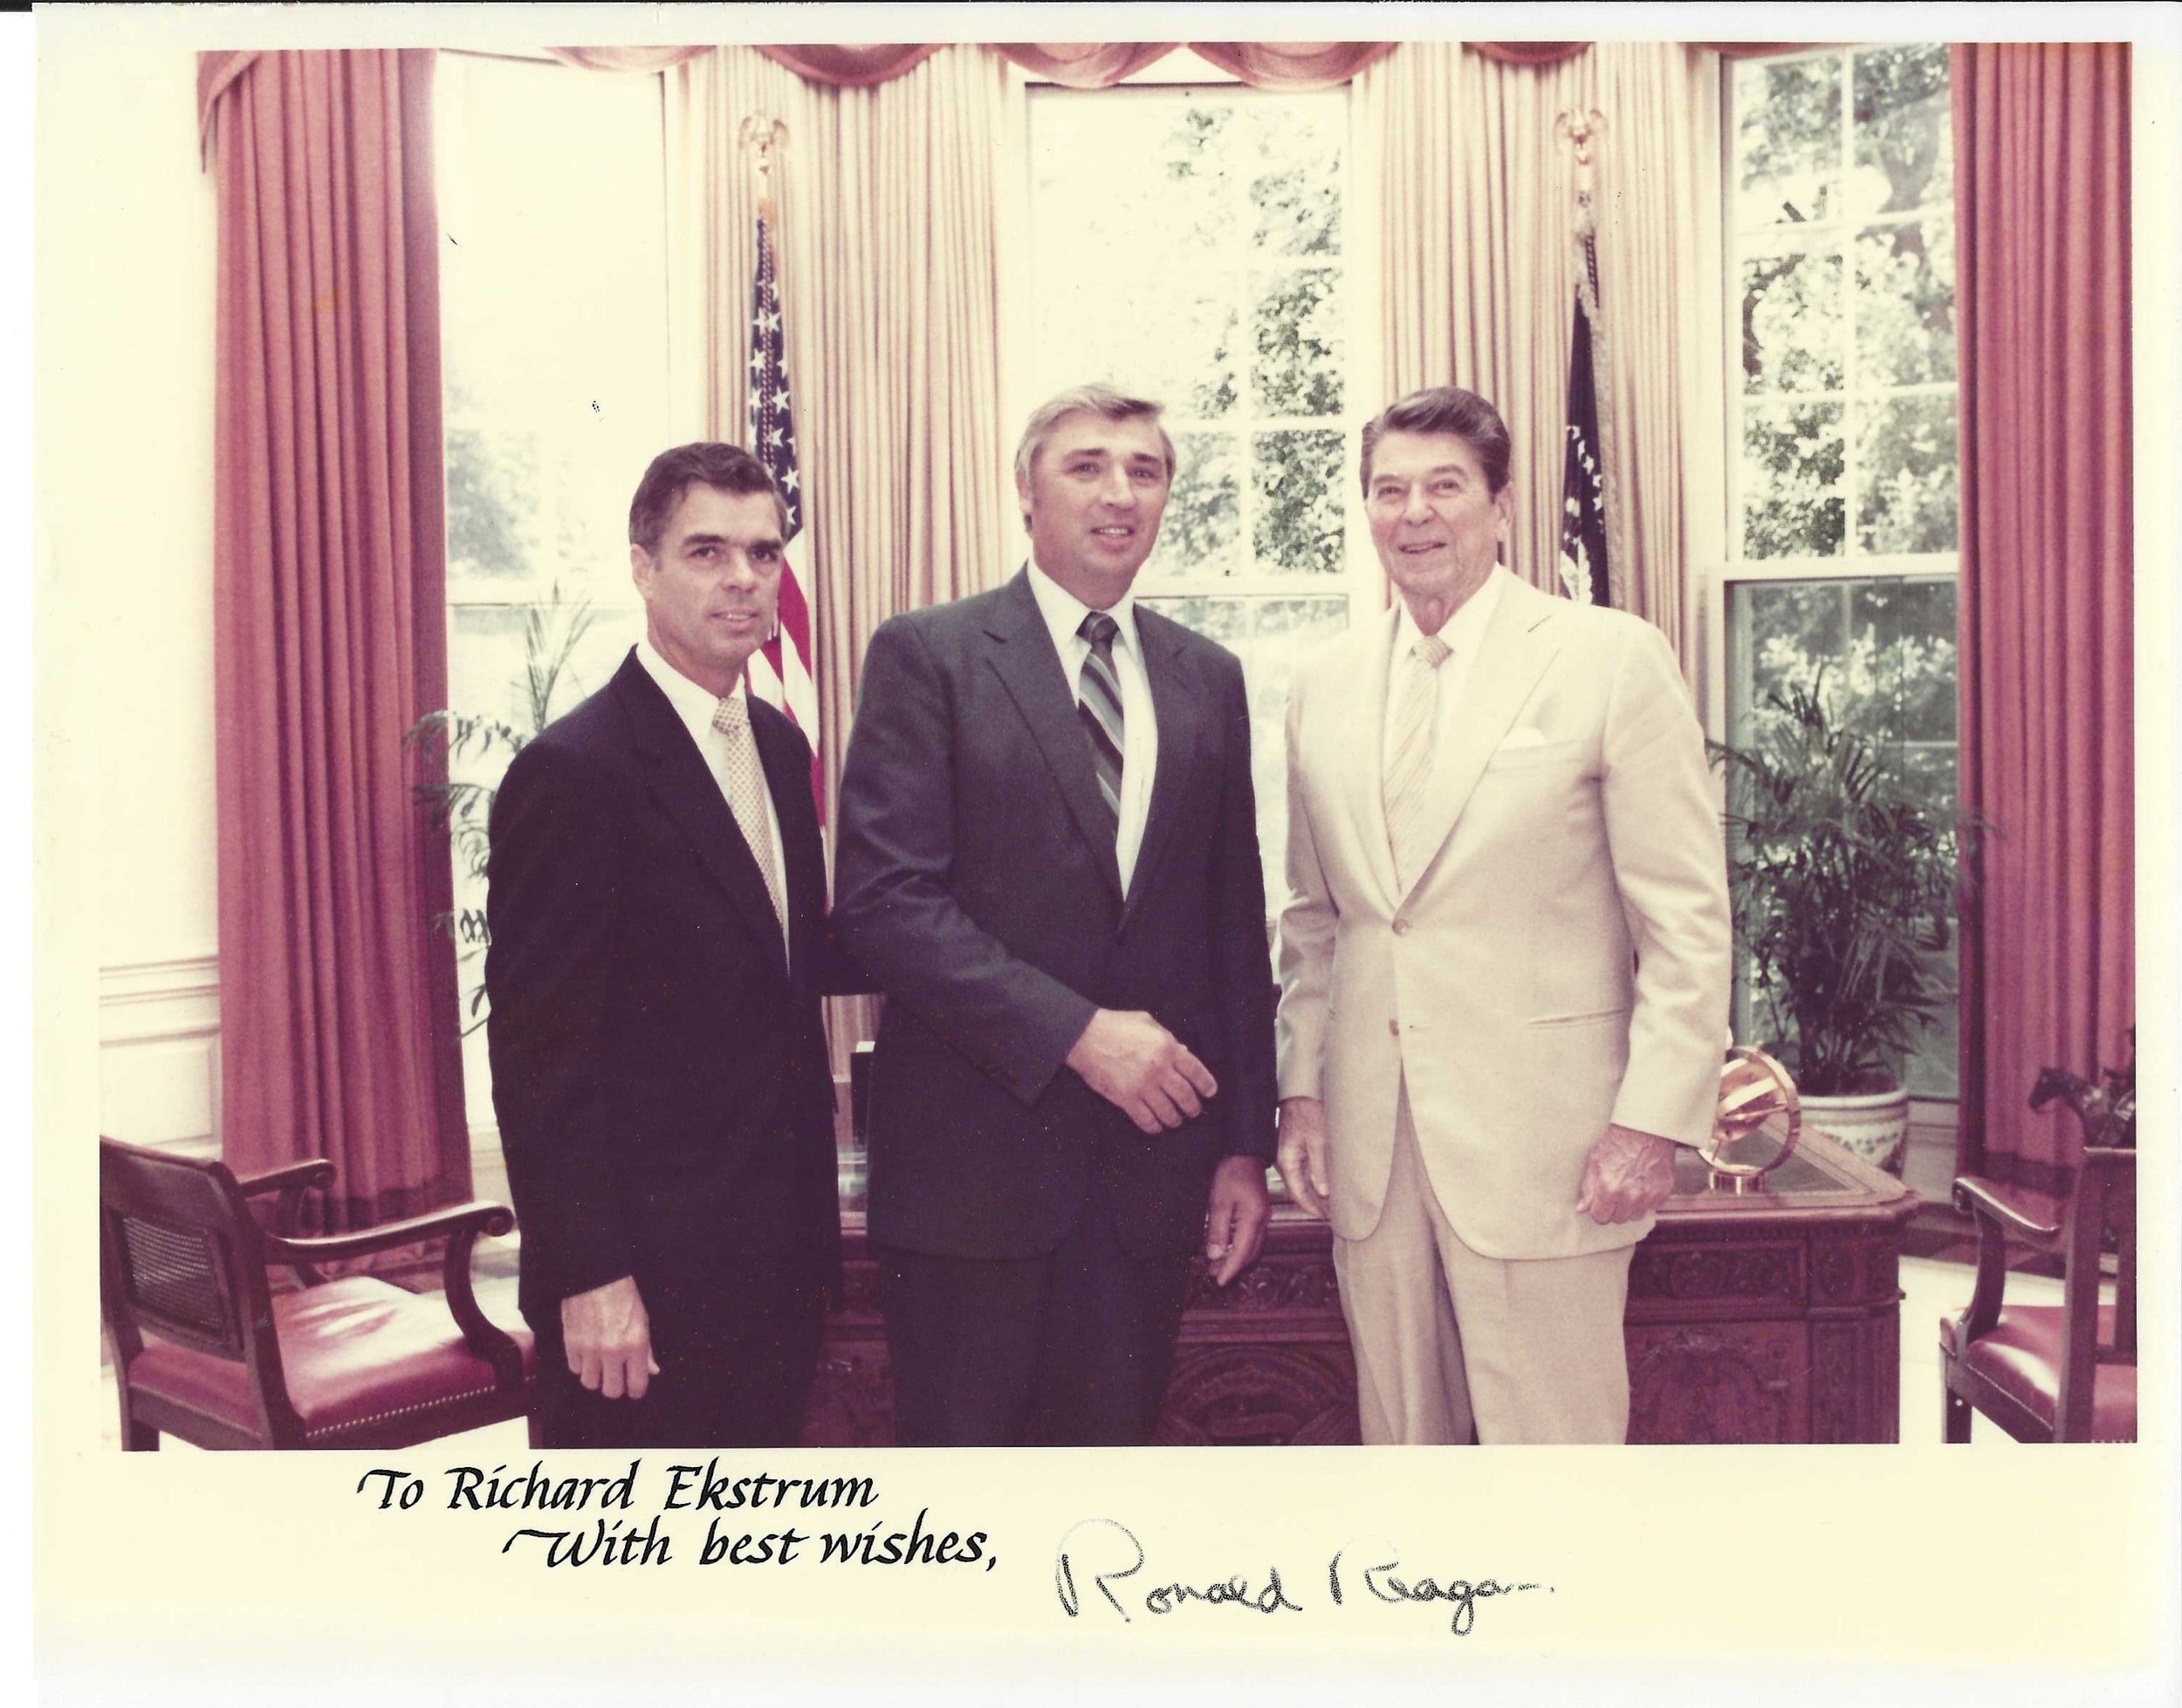 President Ronald Reagan and Richard